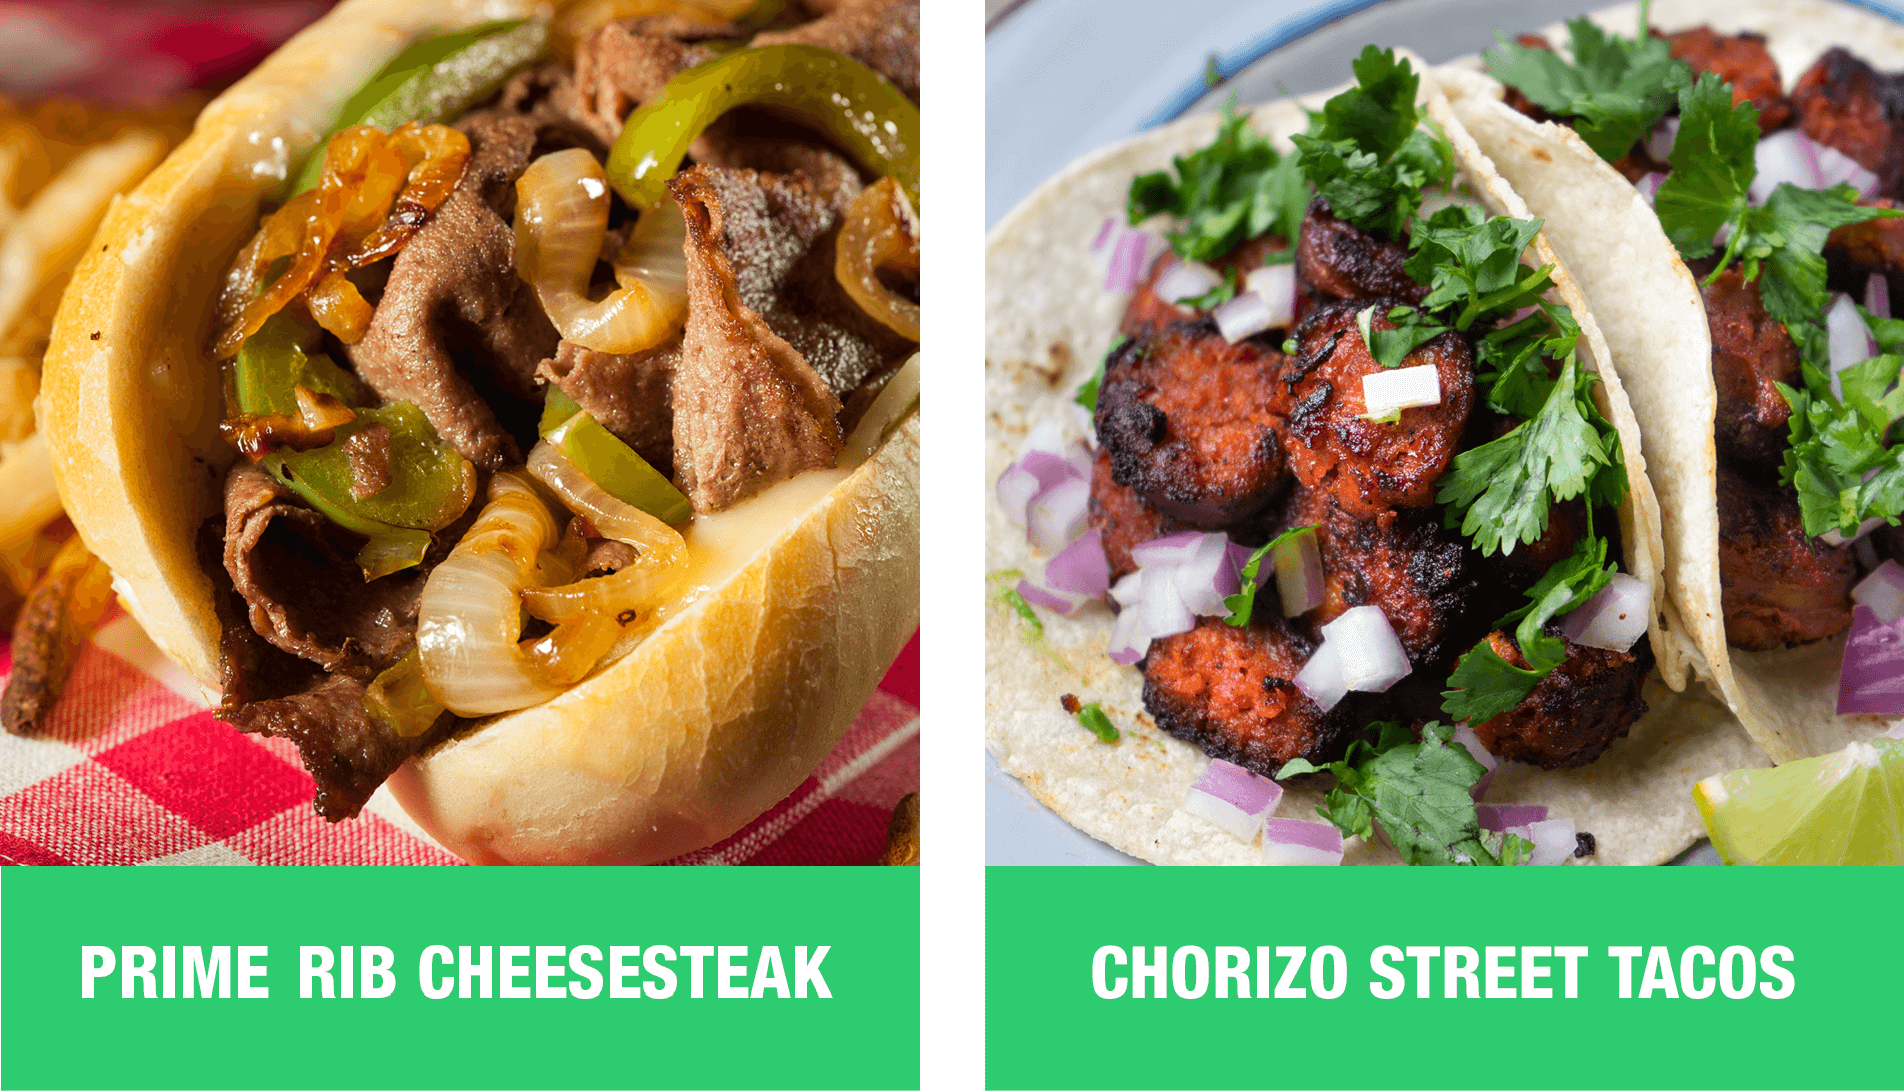 Prime Rib Cheesesteak and Chorizo Street Tacos